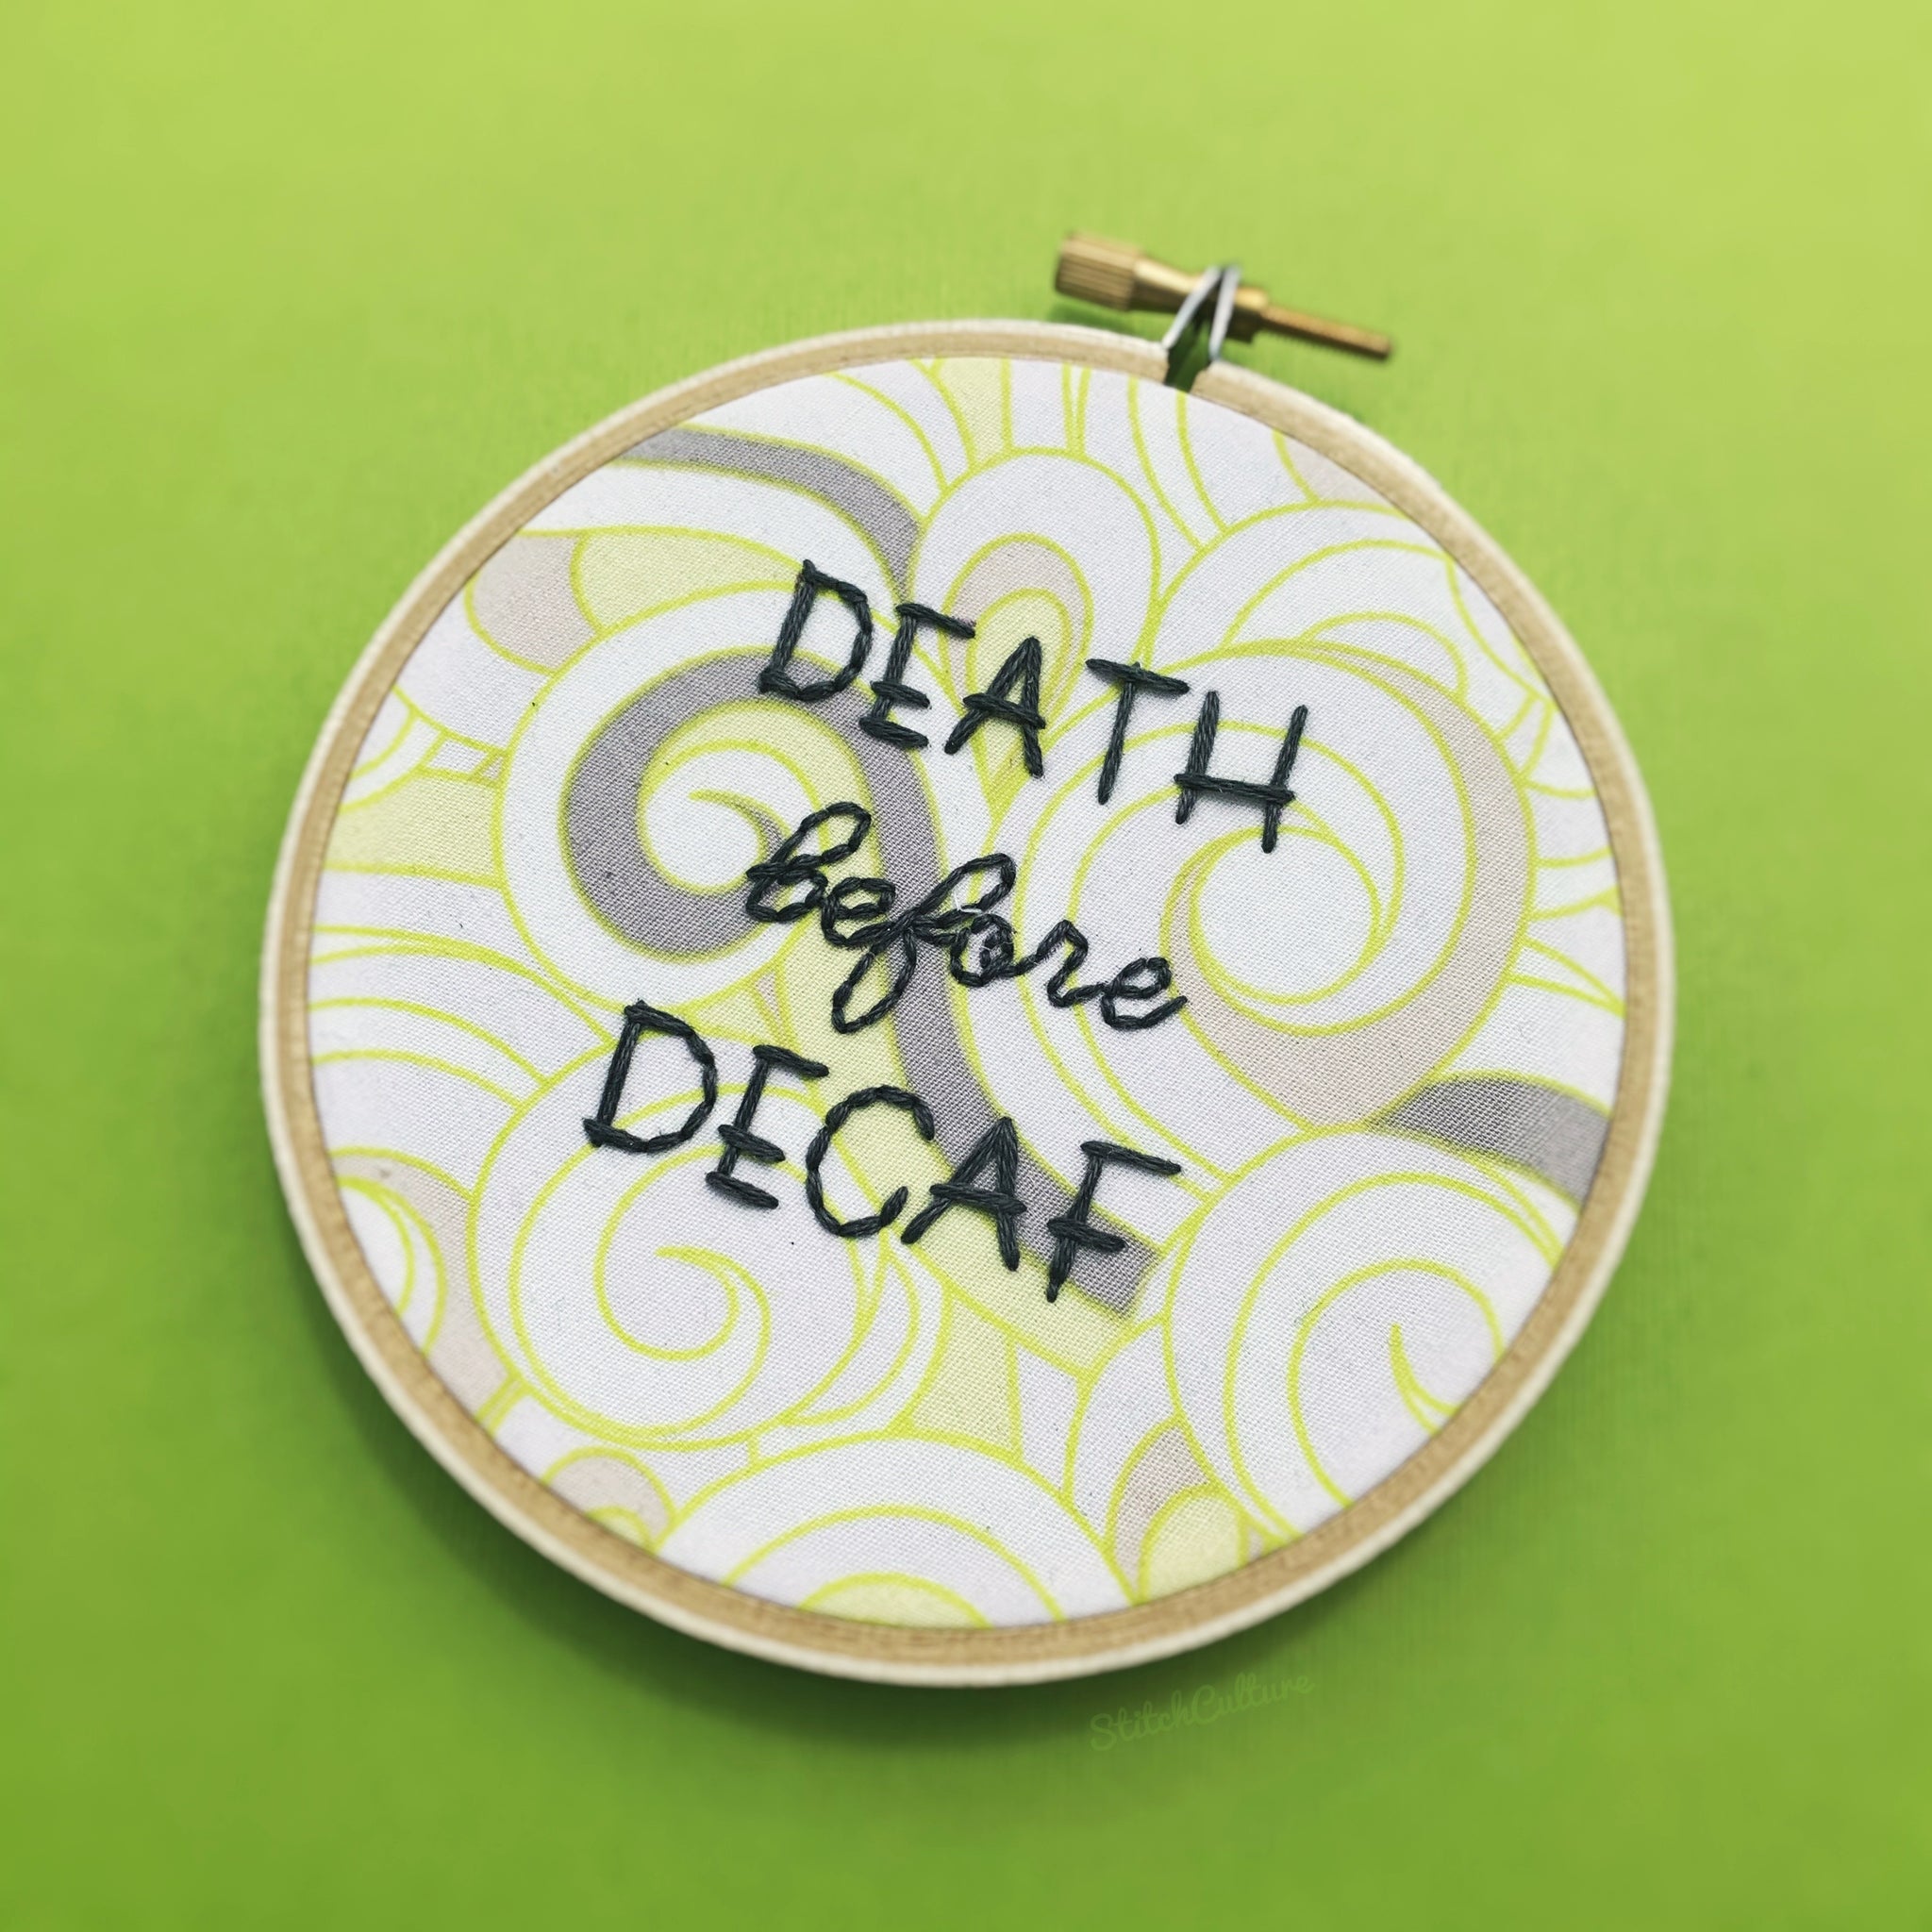 DEATH BEFORE DECAF / Coffee Lovers Embroidery Hoop